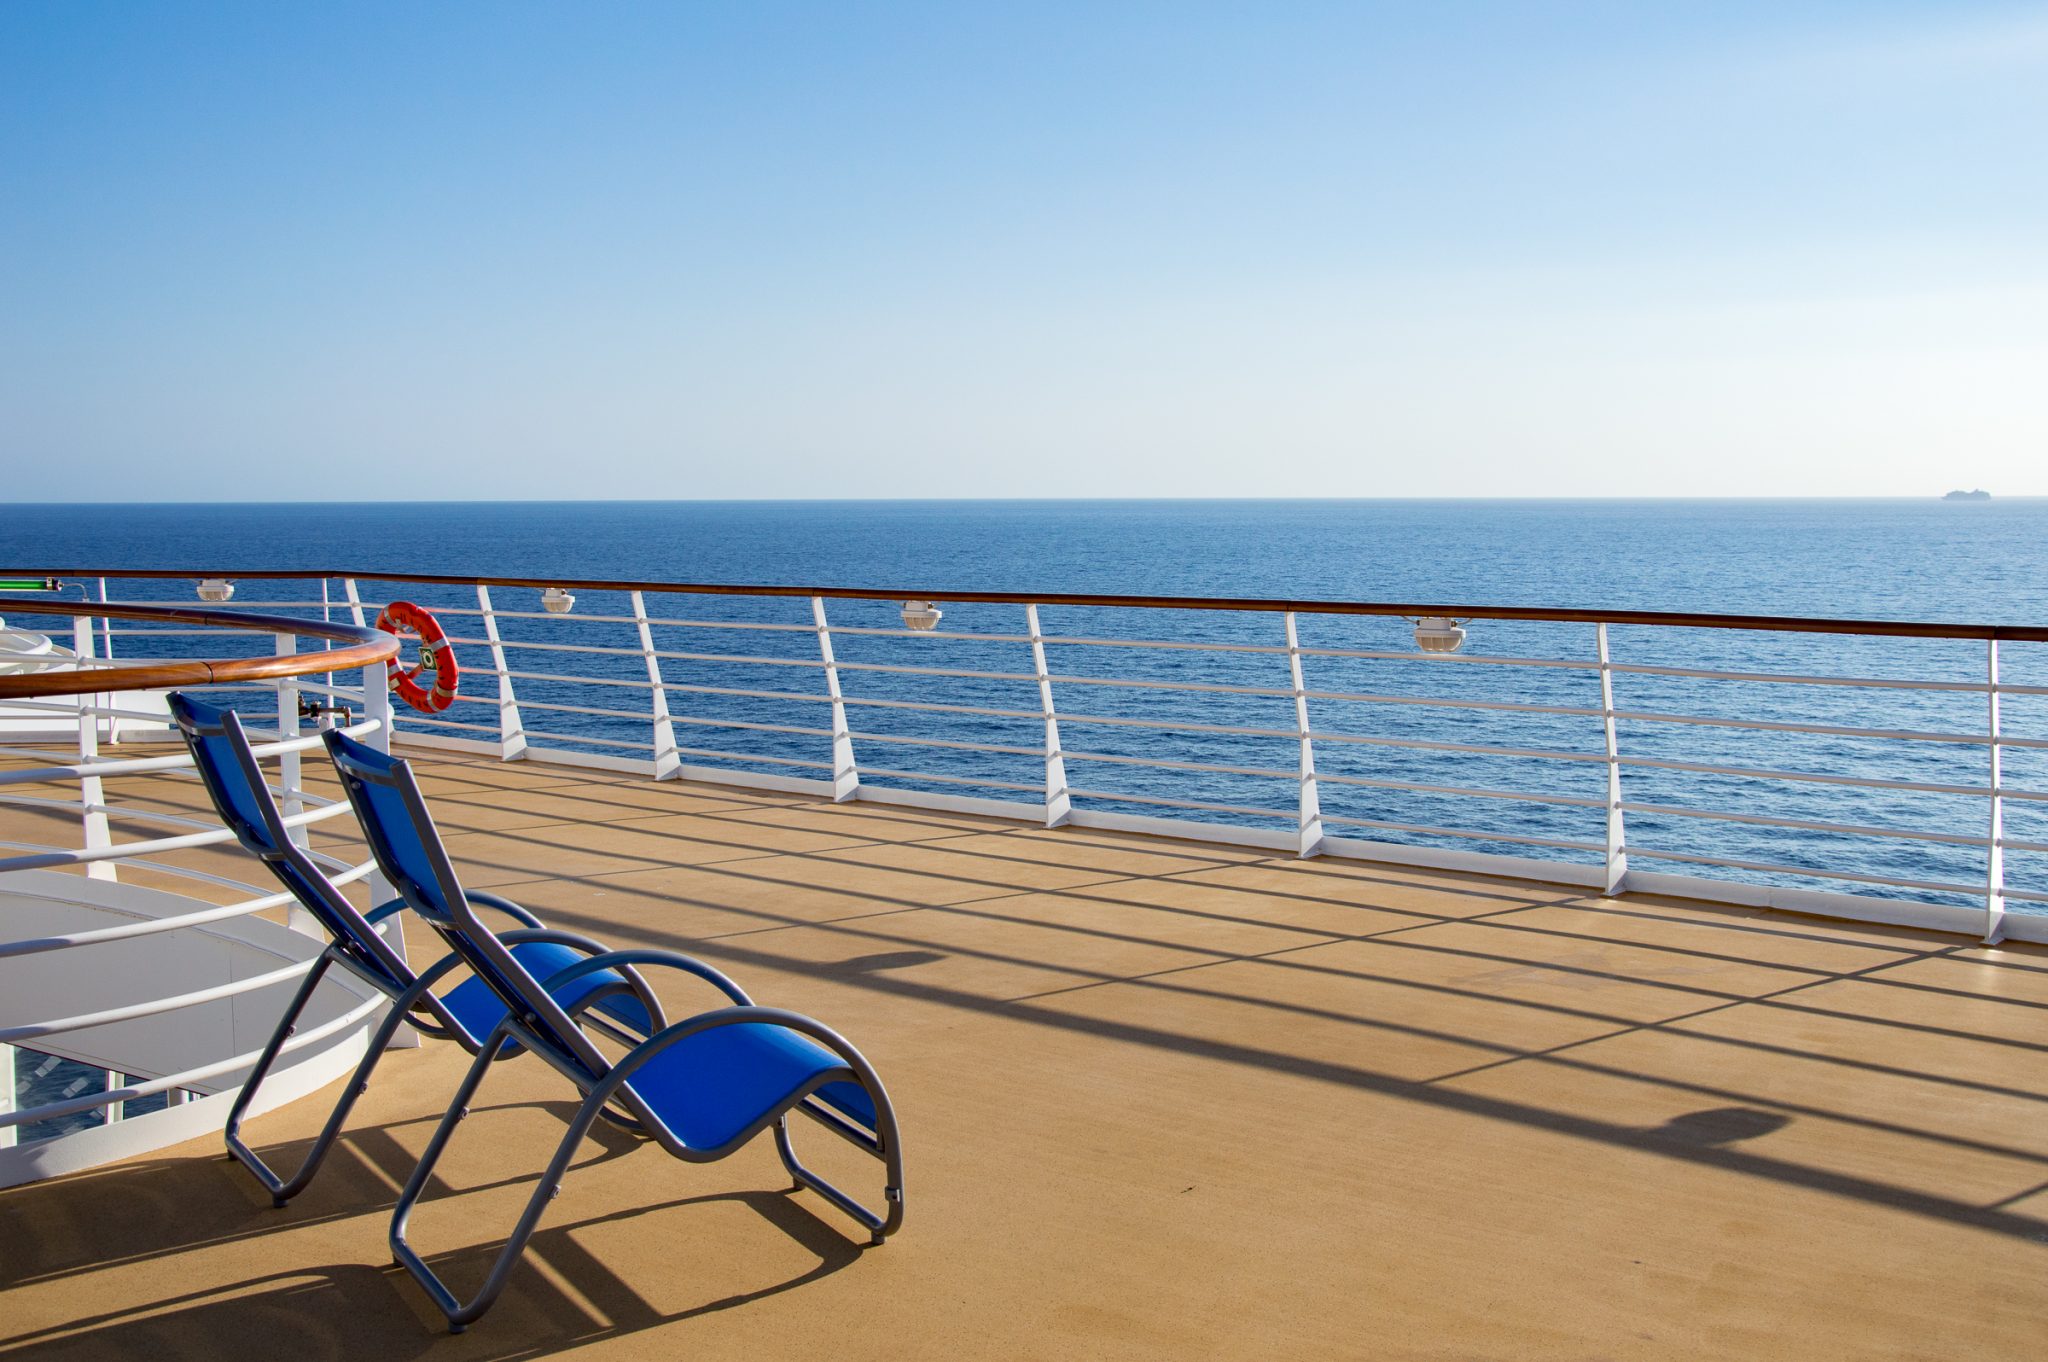 Sun lounger aboard the Harmony of the Seas